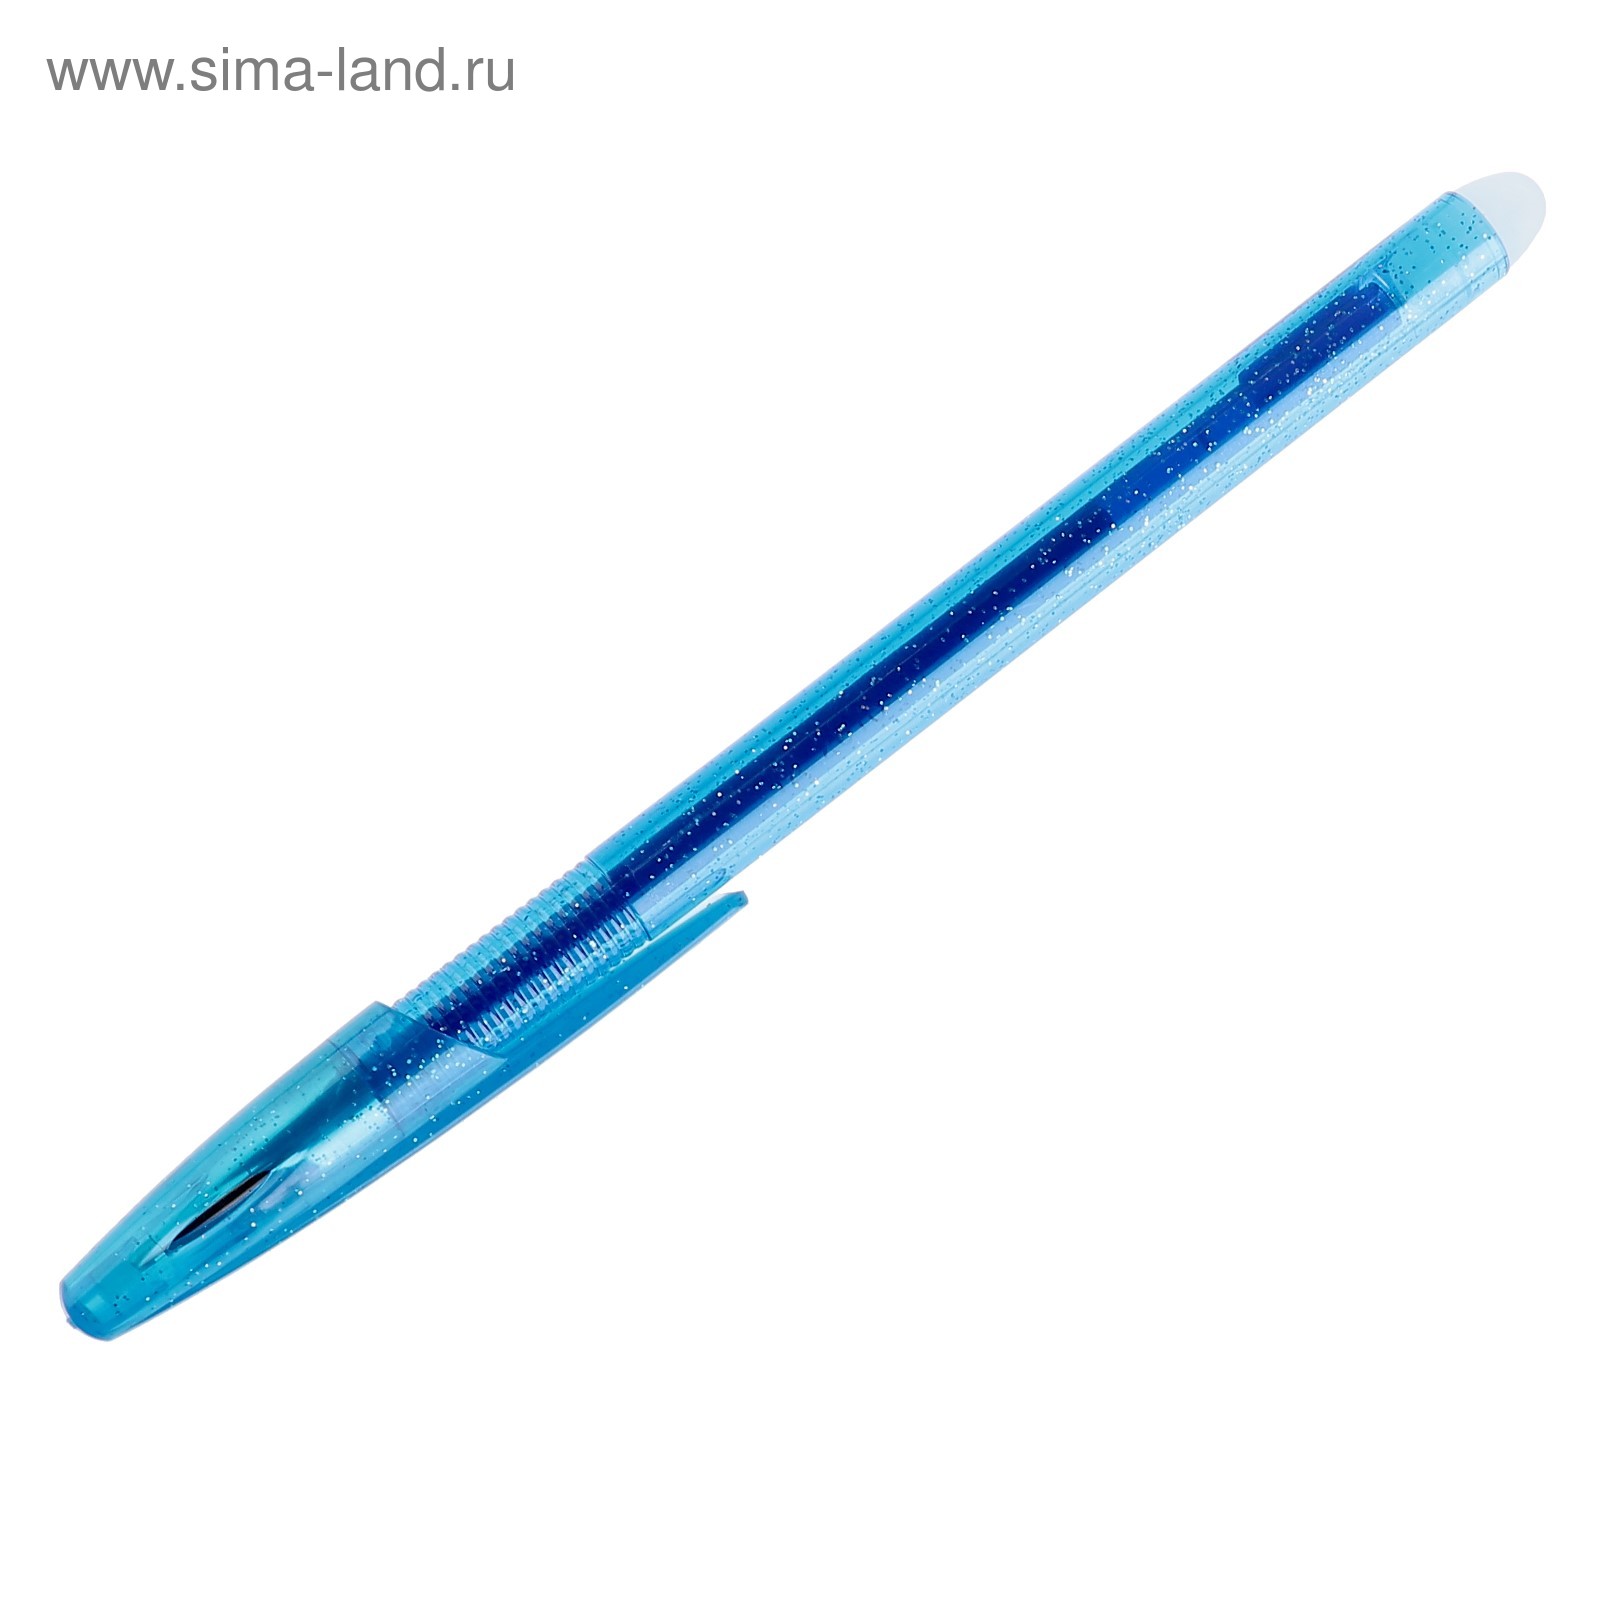 Ручка стик. Ручка гел.пиши-стирай Erich Krause r-301 "Magic Gel", 0.5мм синяя. Ручка гелевая стираемая Erich Krause r301 Magic Gel. Ручка Эрих Краузе синяя гелевая. Ручка гелевая ERICHKRAUSE чернила синие 0,5.